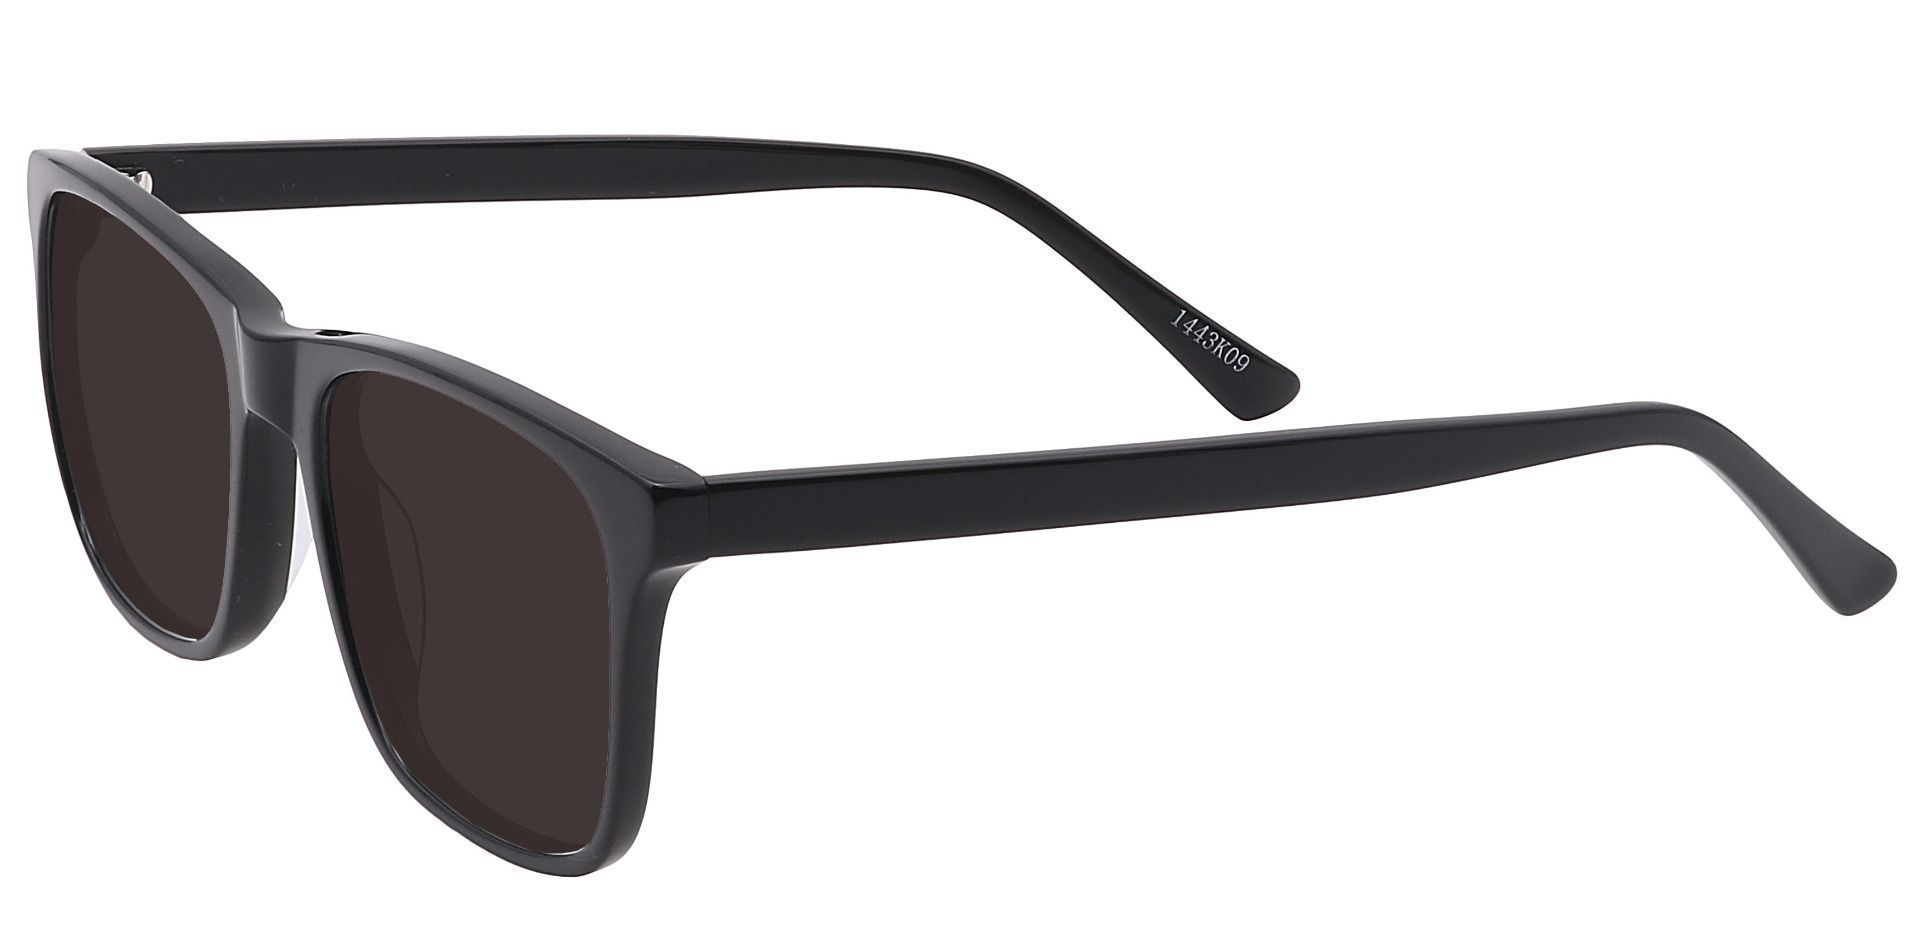 Cantina Square Progressive Sunglasses - Black Frame With Gray Lenses